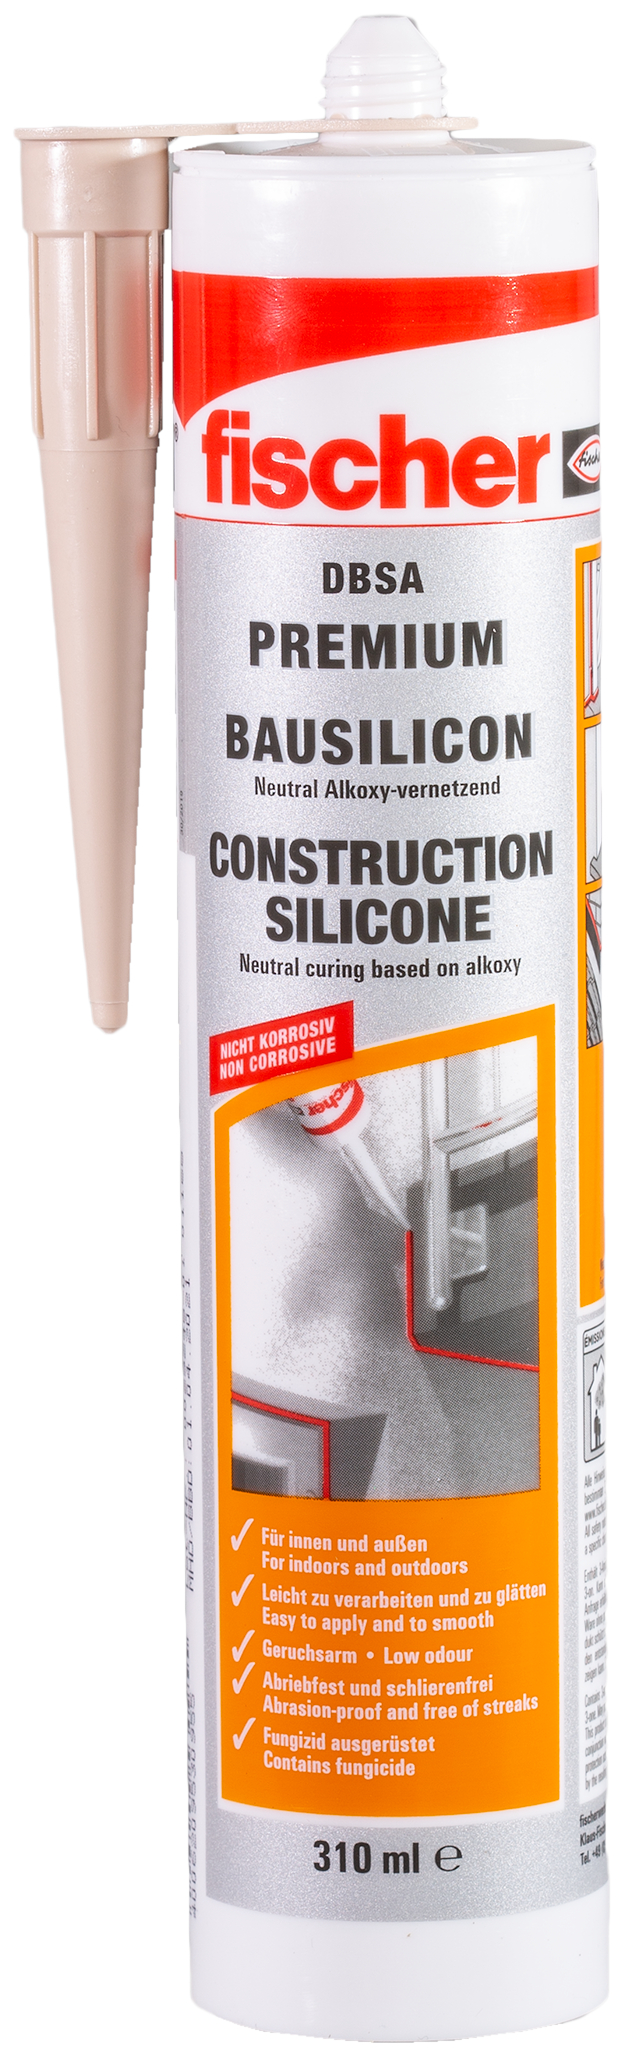 Premium construction silicone DBSA